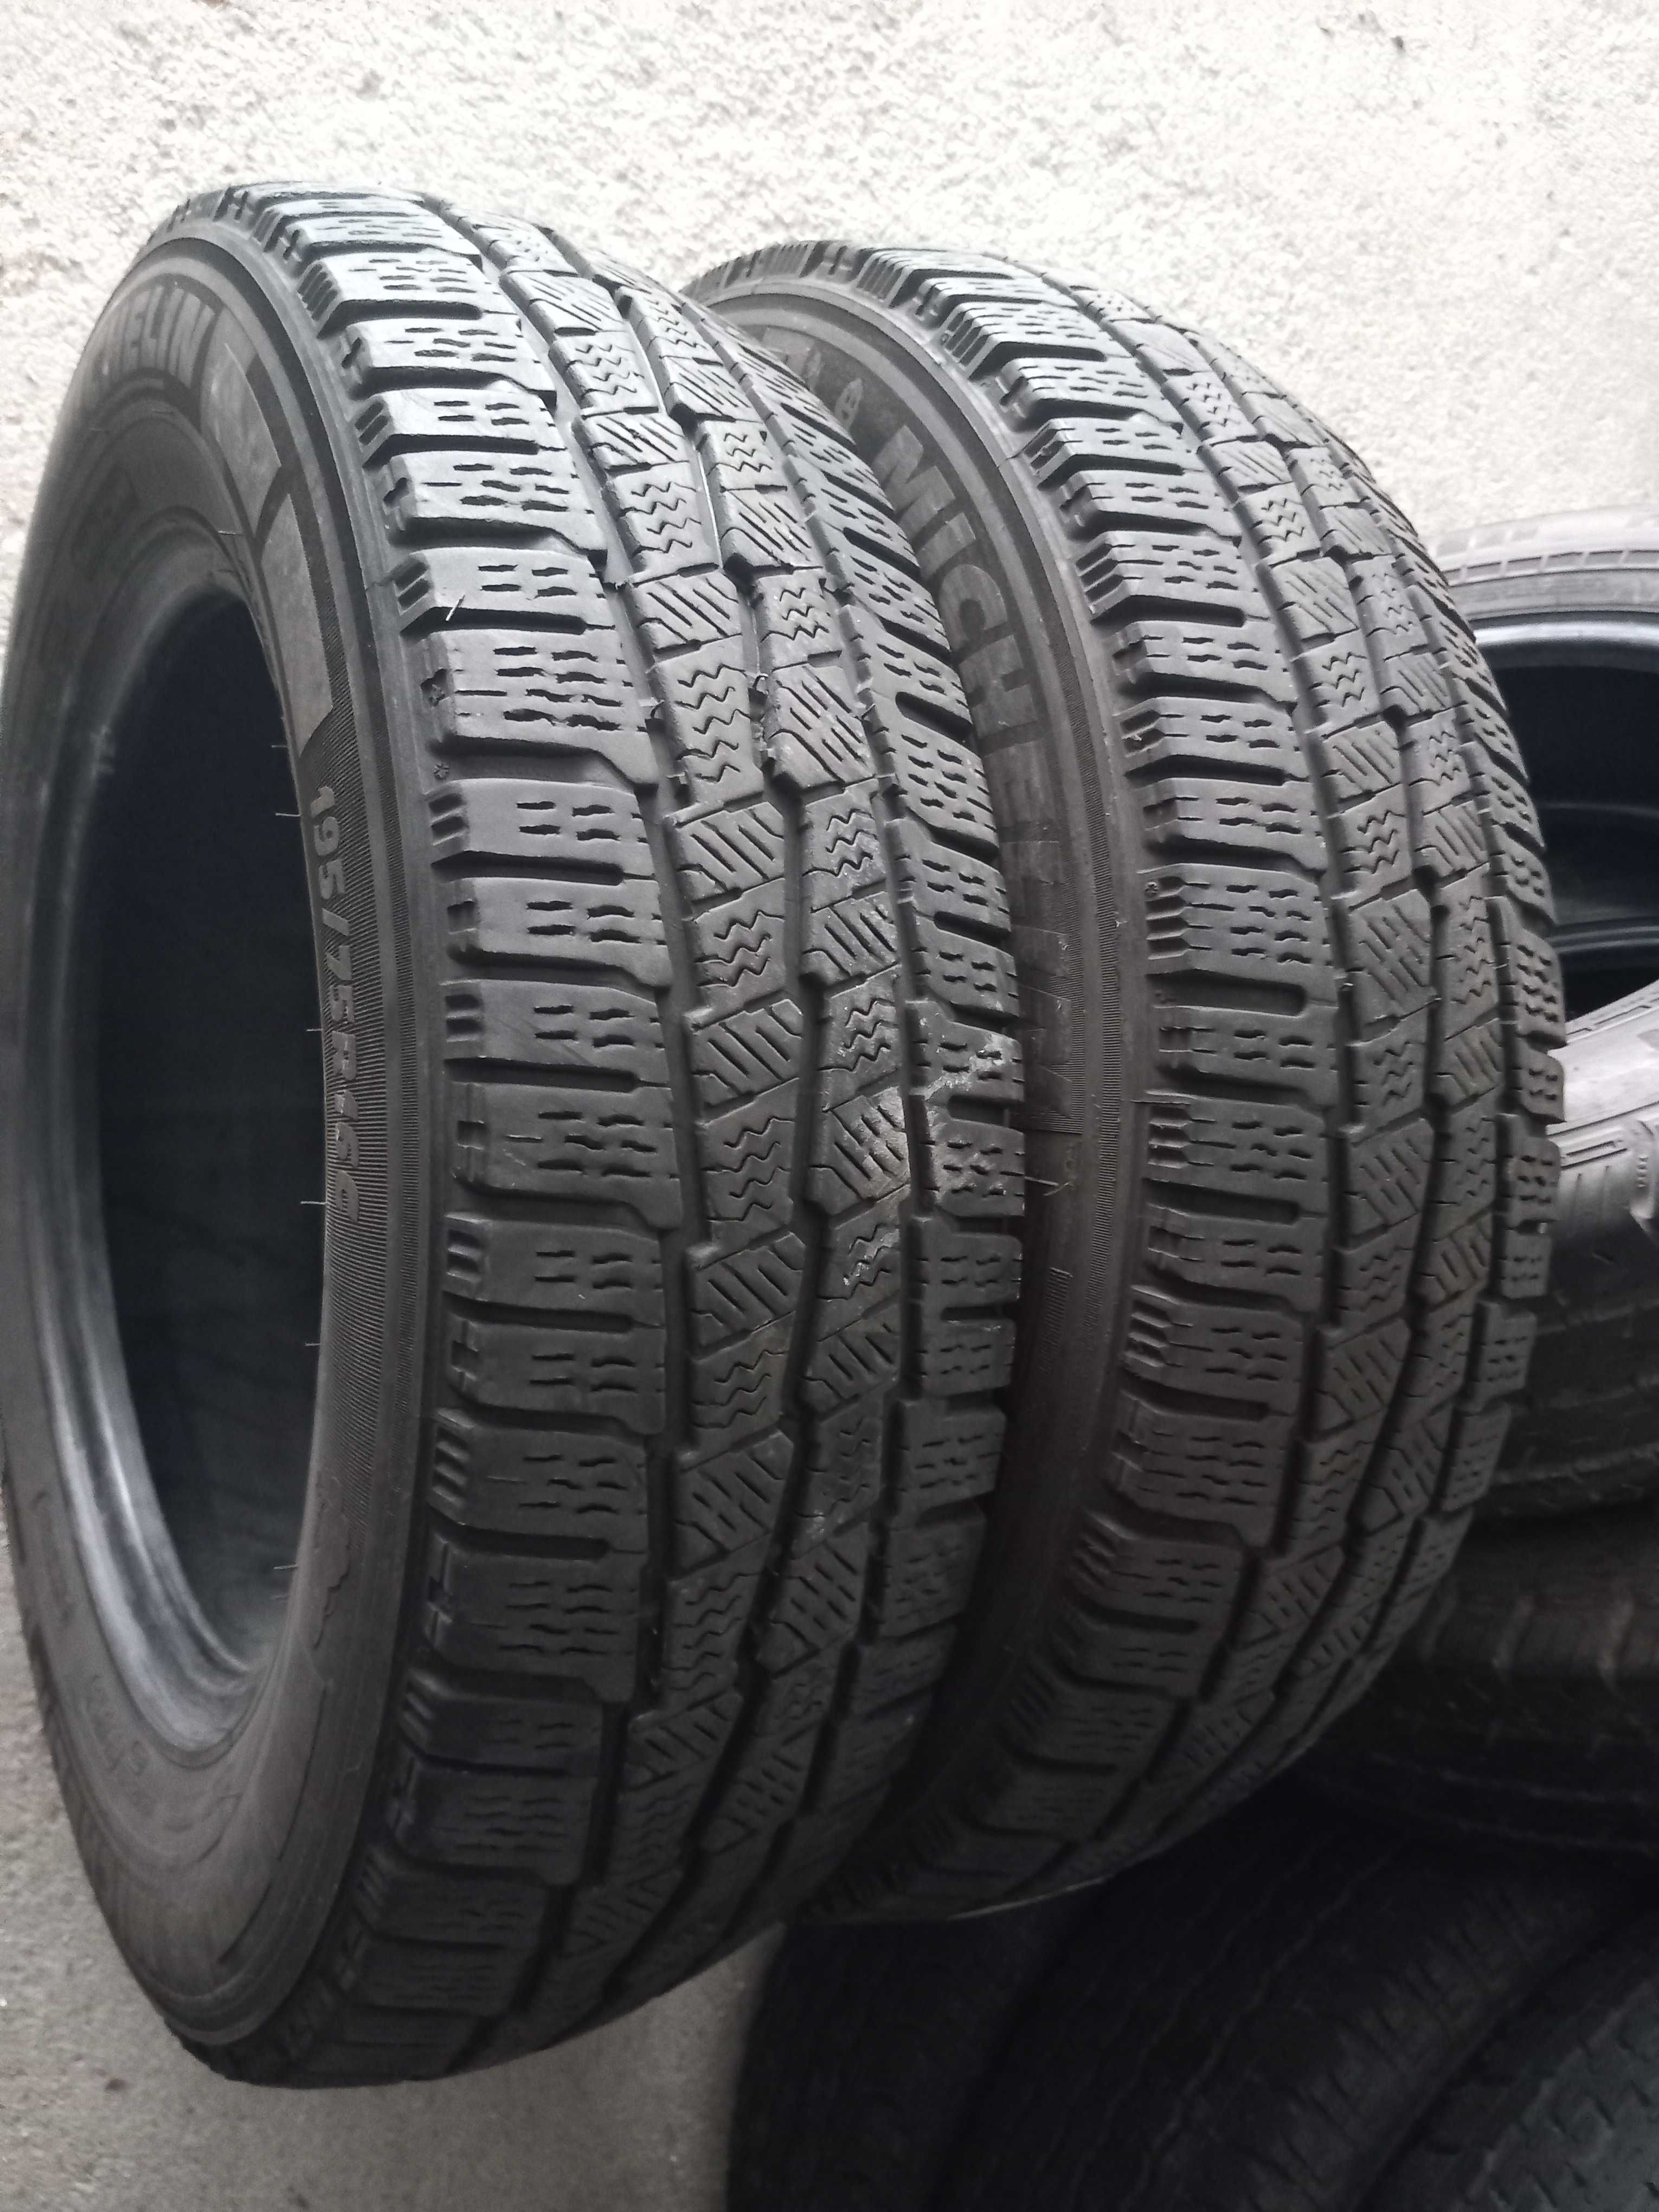 4 pneus 195/75R16 C Michelin seminovos